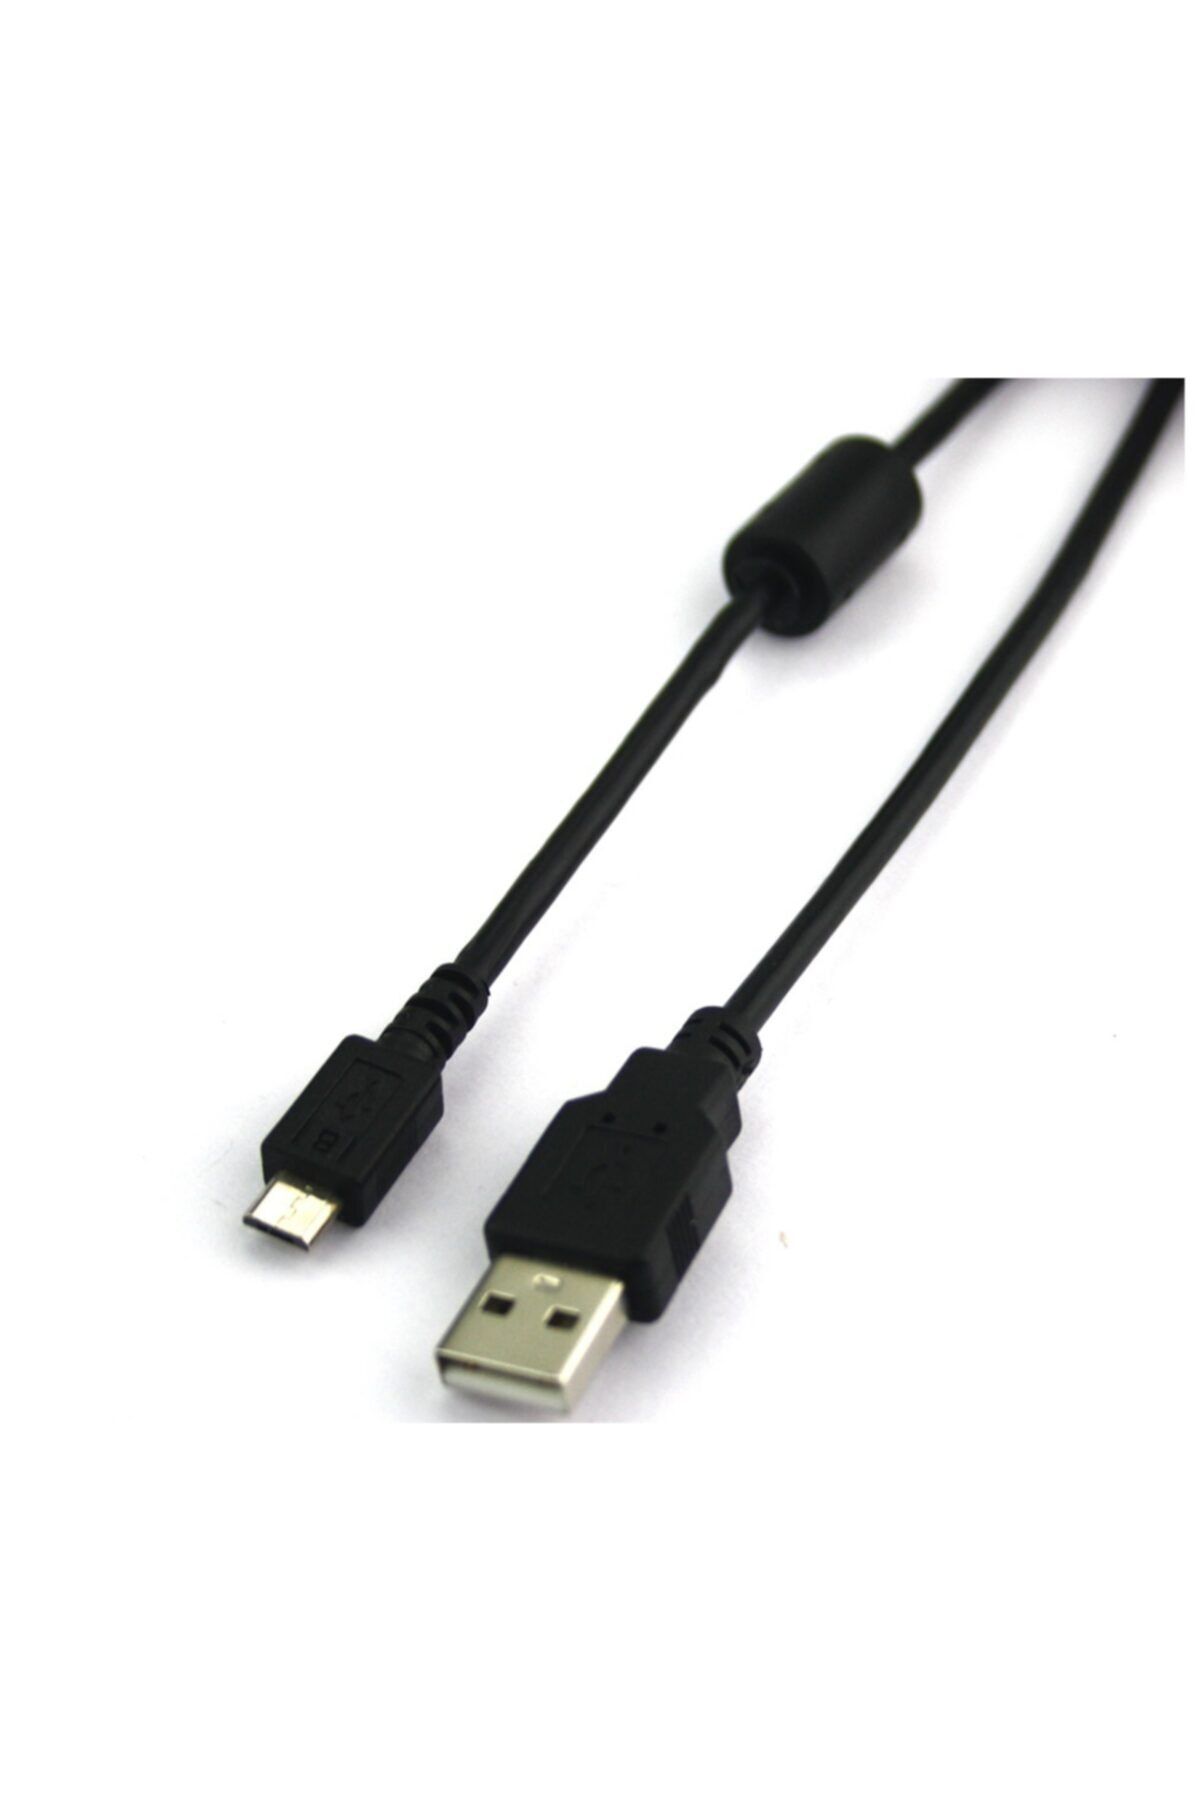 Asian Tech Store 5-pin Xlr Erkek To 3-pin Xlr Dişi Dmx Adaptör Kablo 1 m